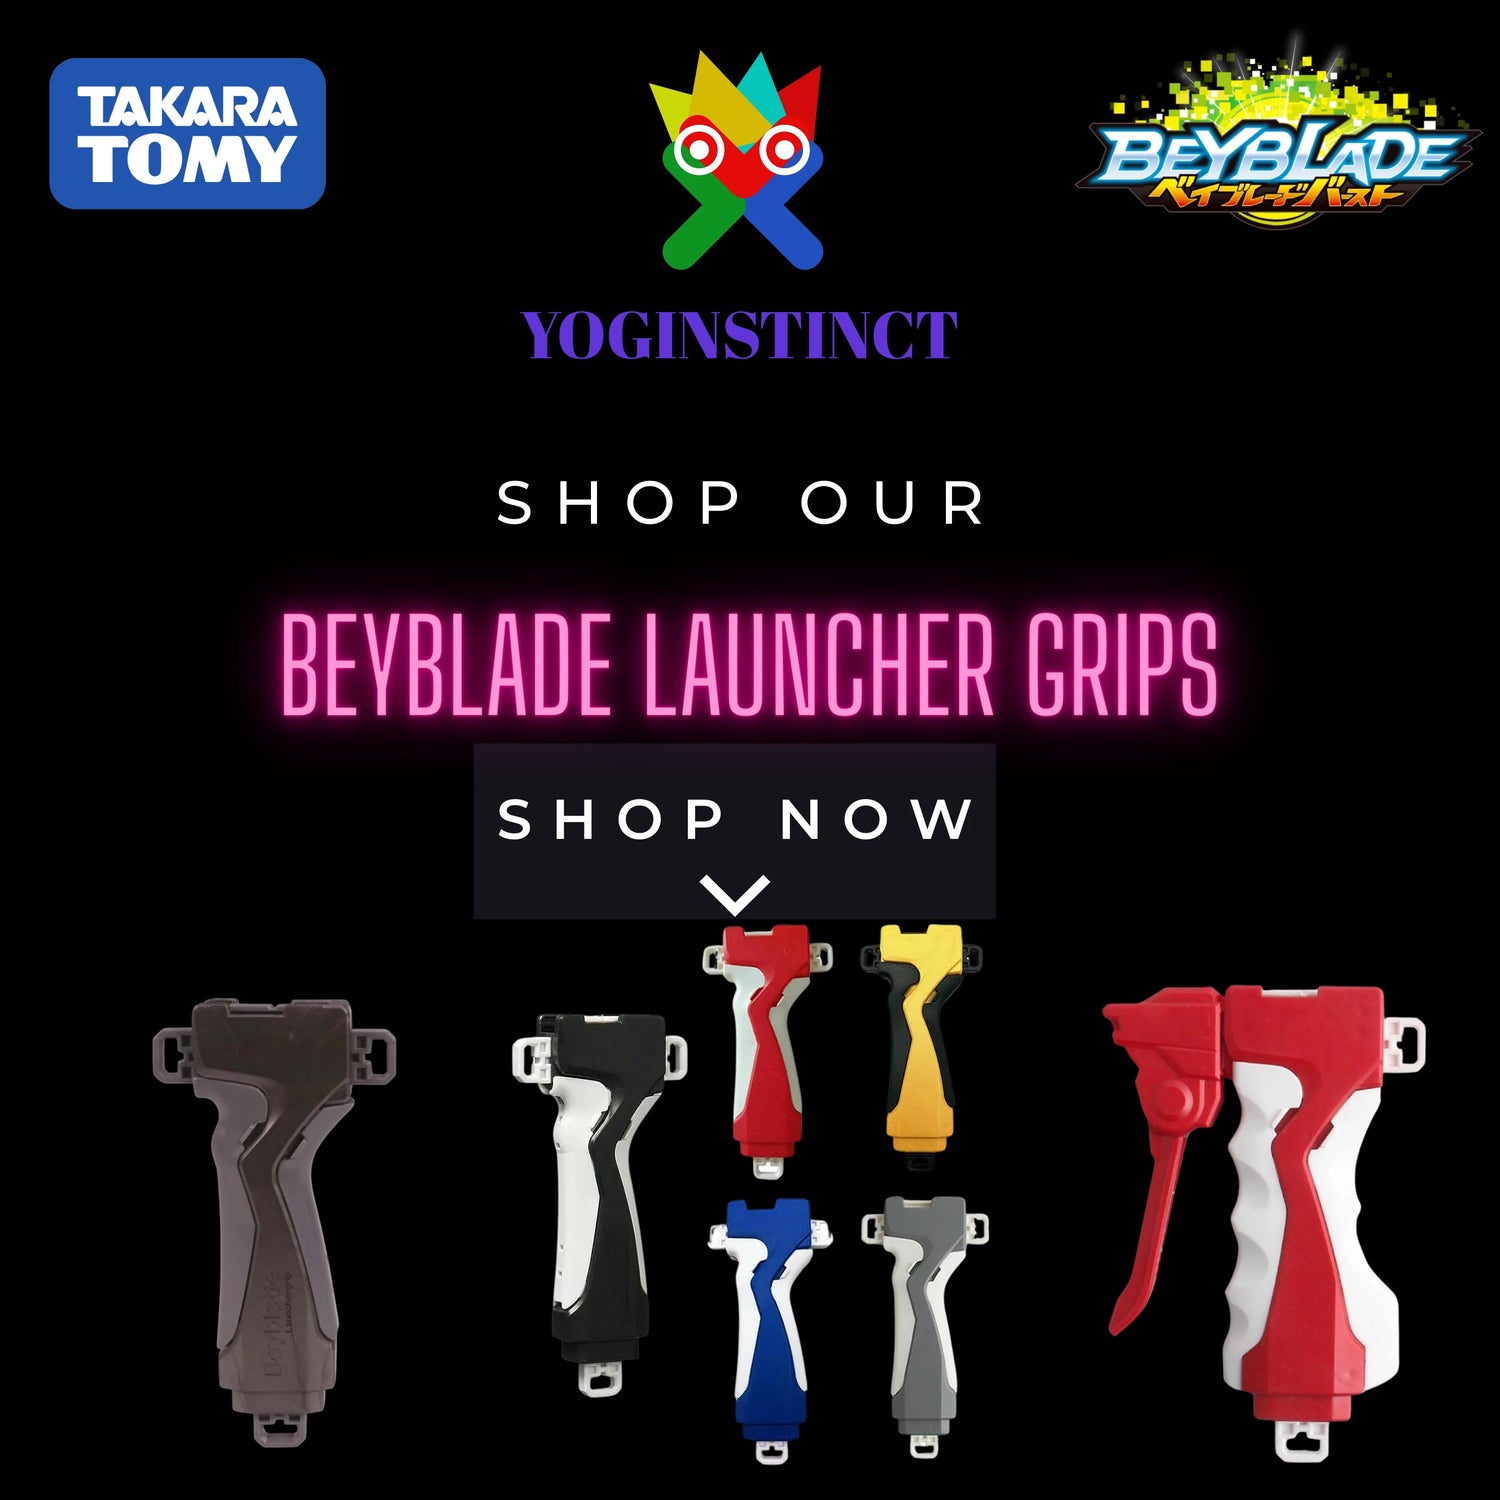 Beyblade Launcher Grips